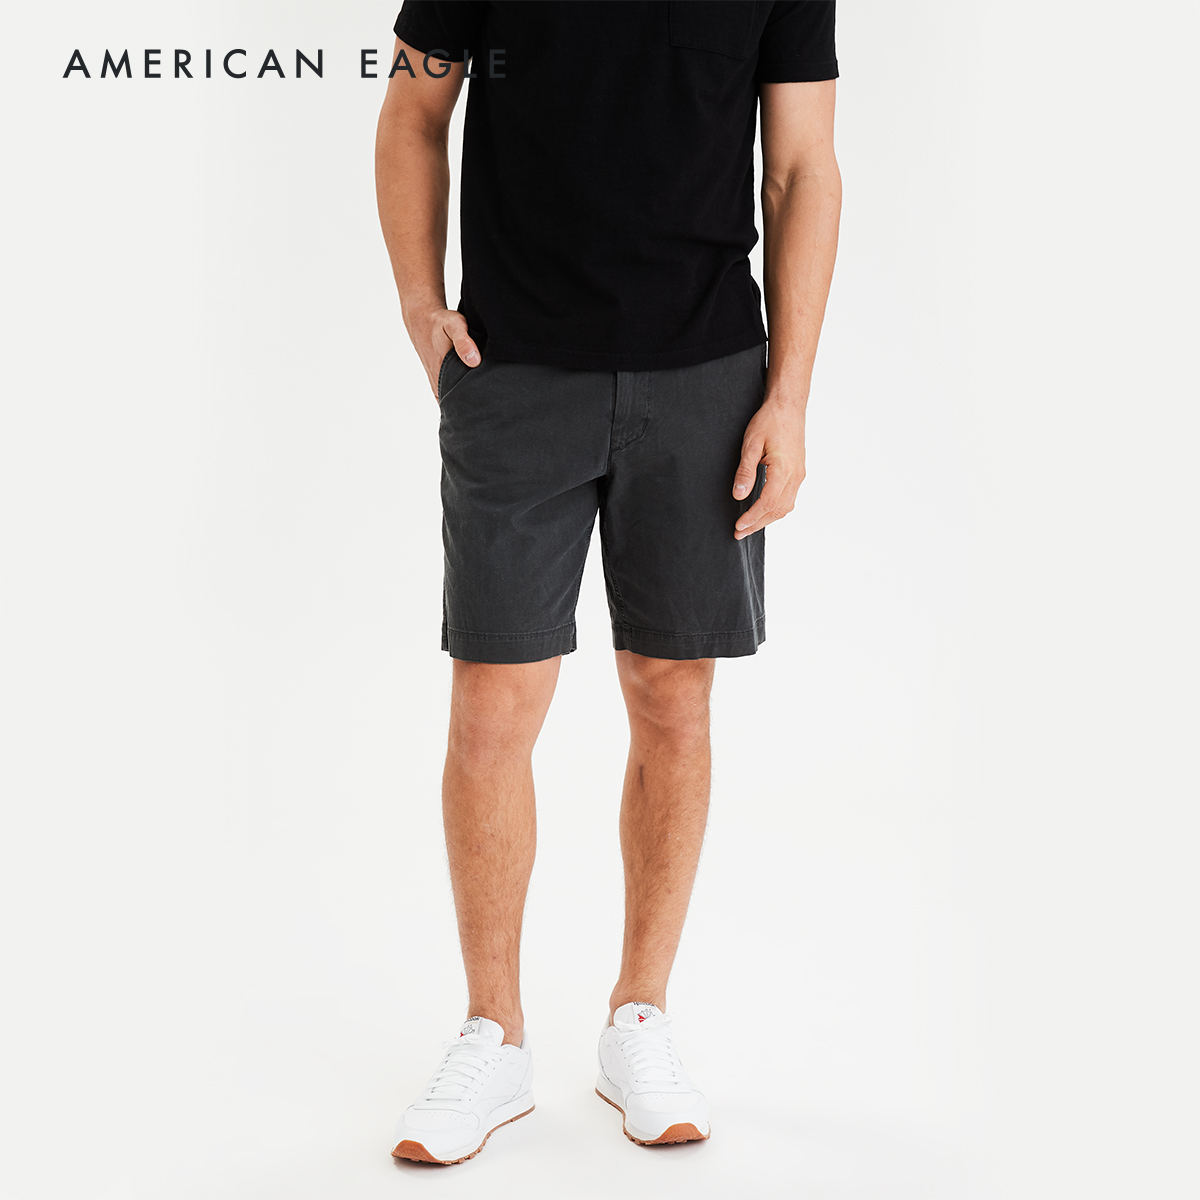 American Eagle Ne(X)t Level Classic Khaki Short กางเกง ผู้ชาย ขาสั้น คลาสสิค(013-6823-001)